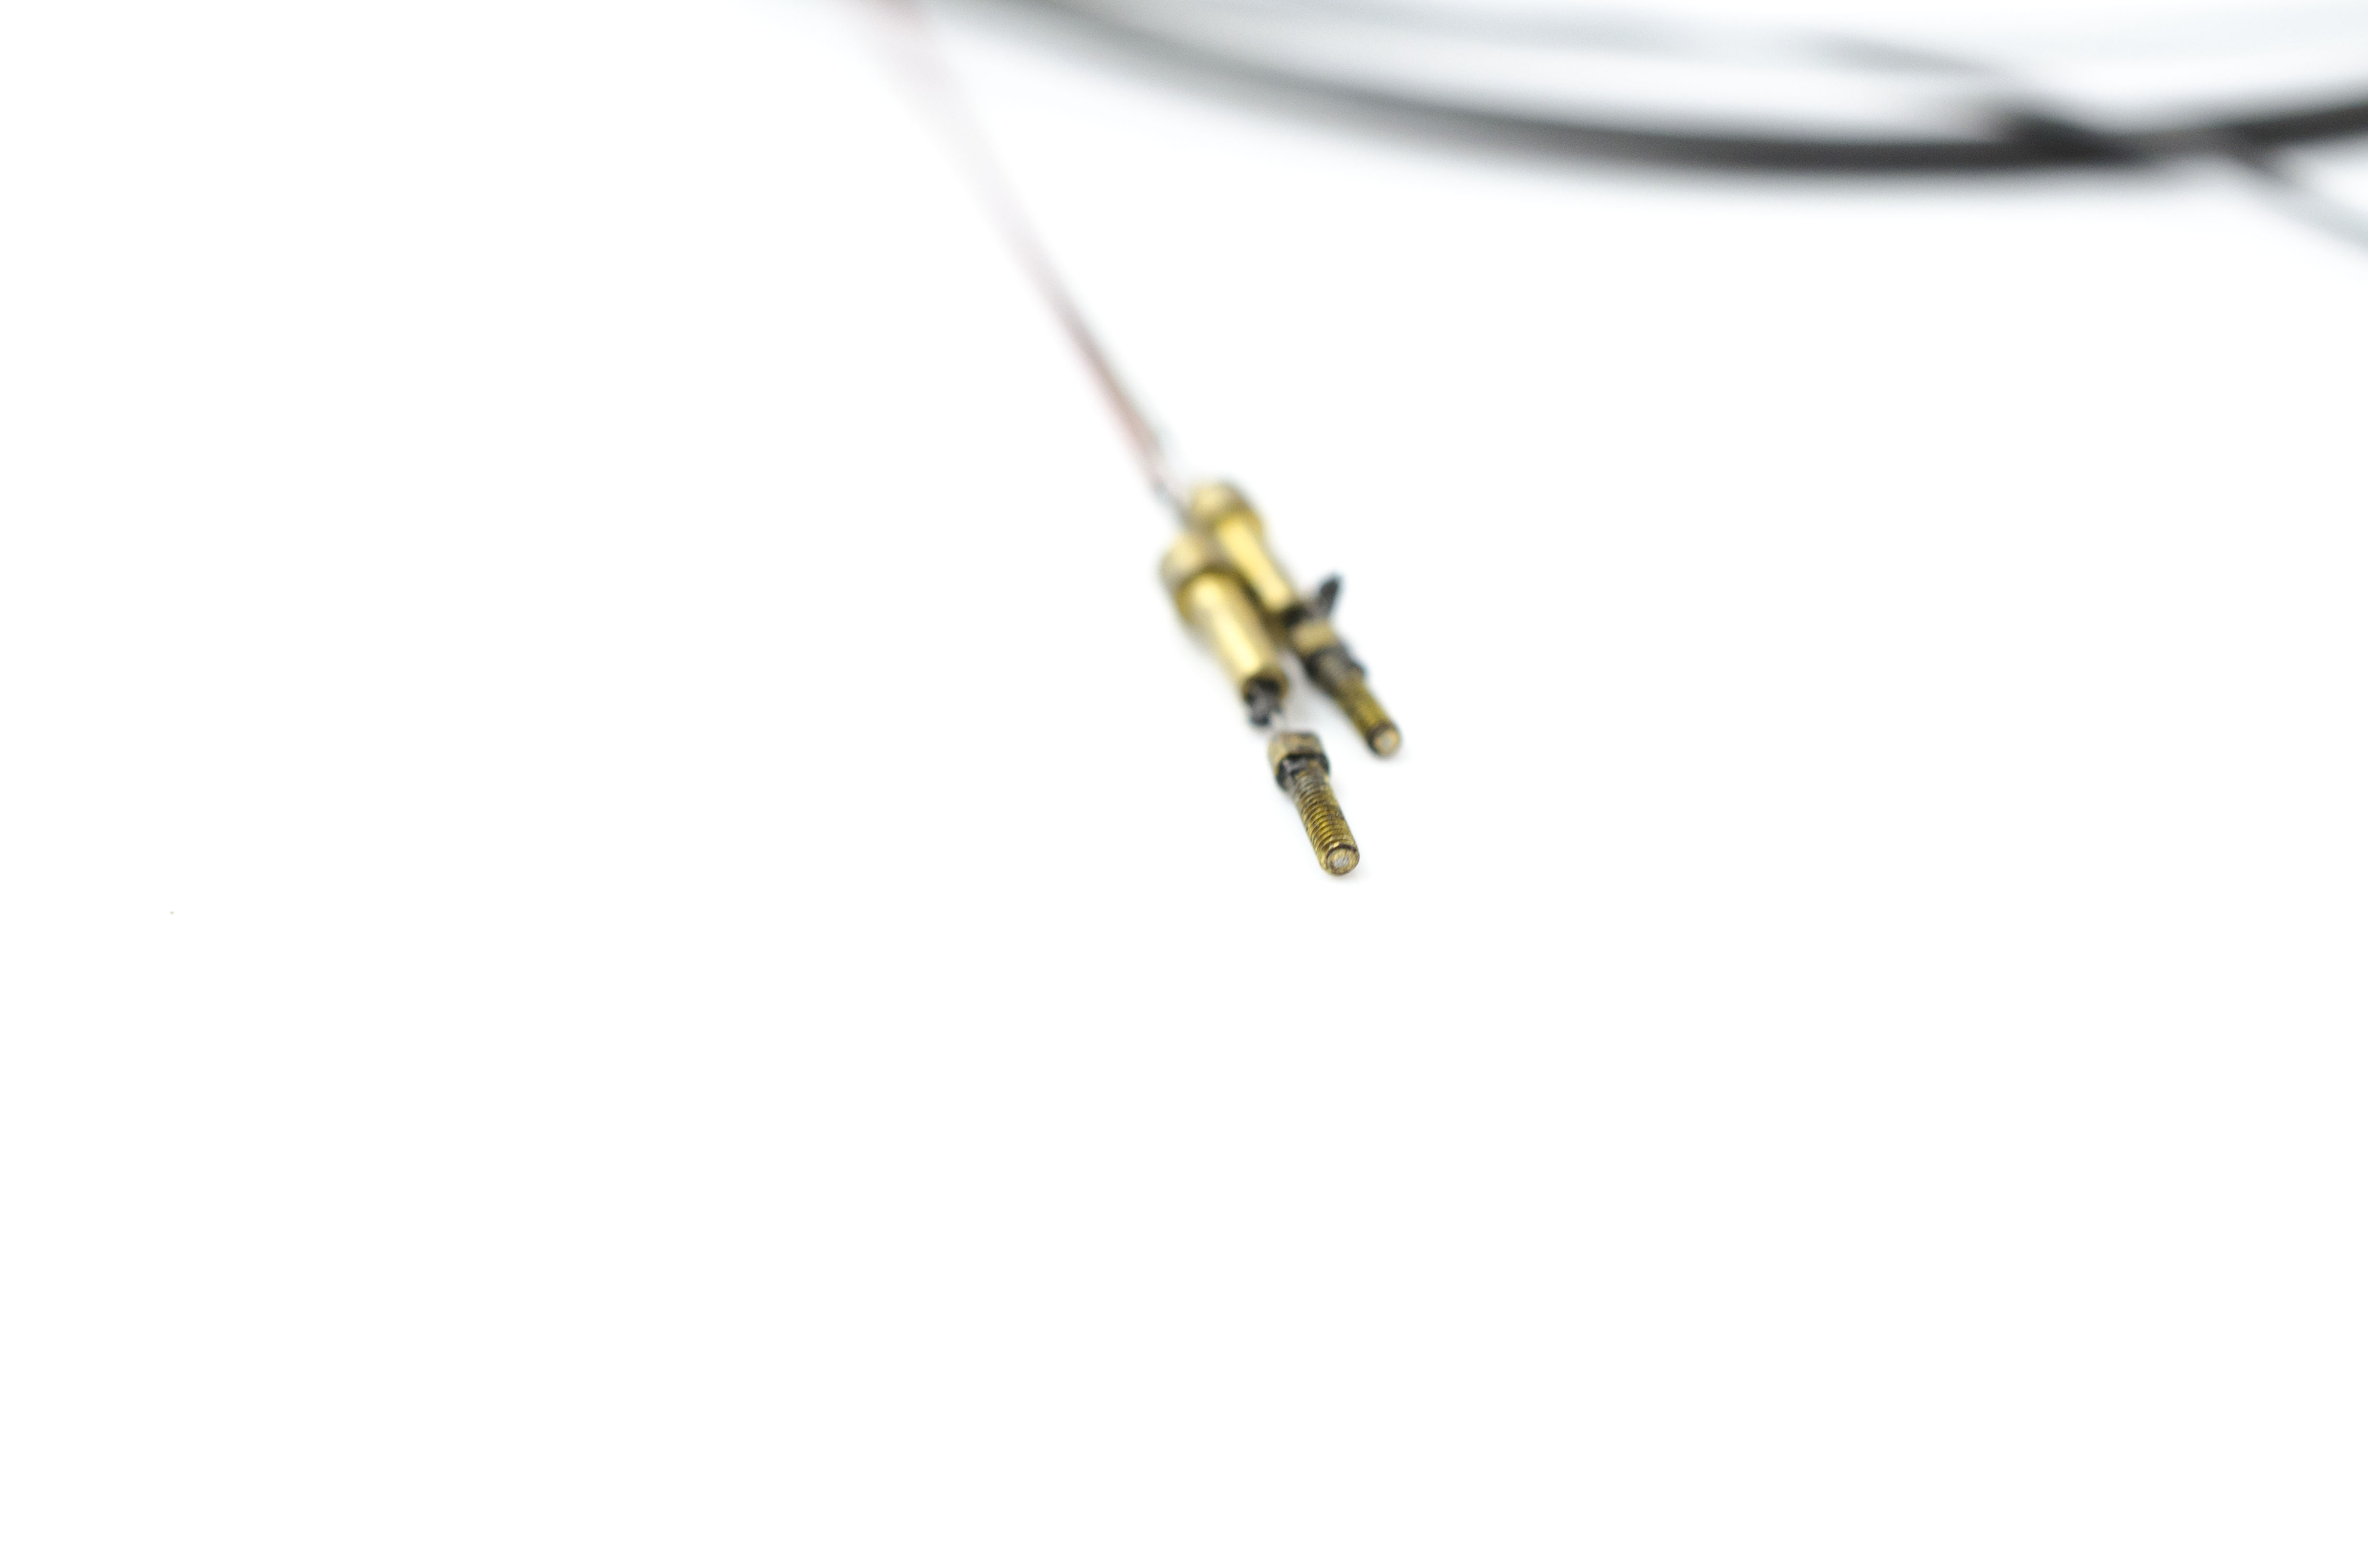 OEM Ultrasonic Transducer Head with Wire Harness - BF-UC160F-OL8, BF-UC260F-OL8